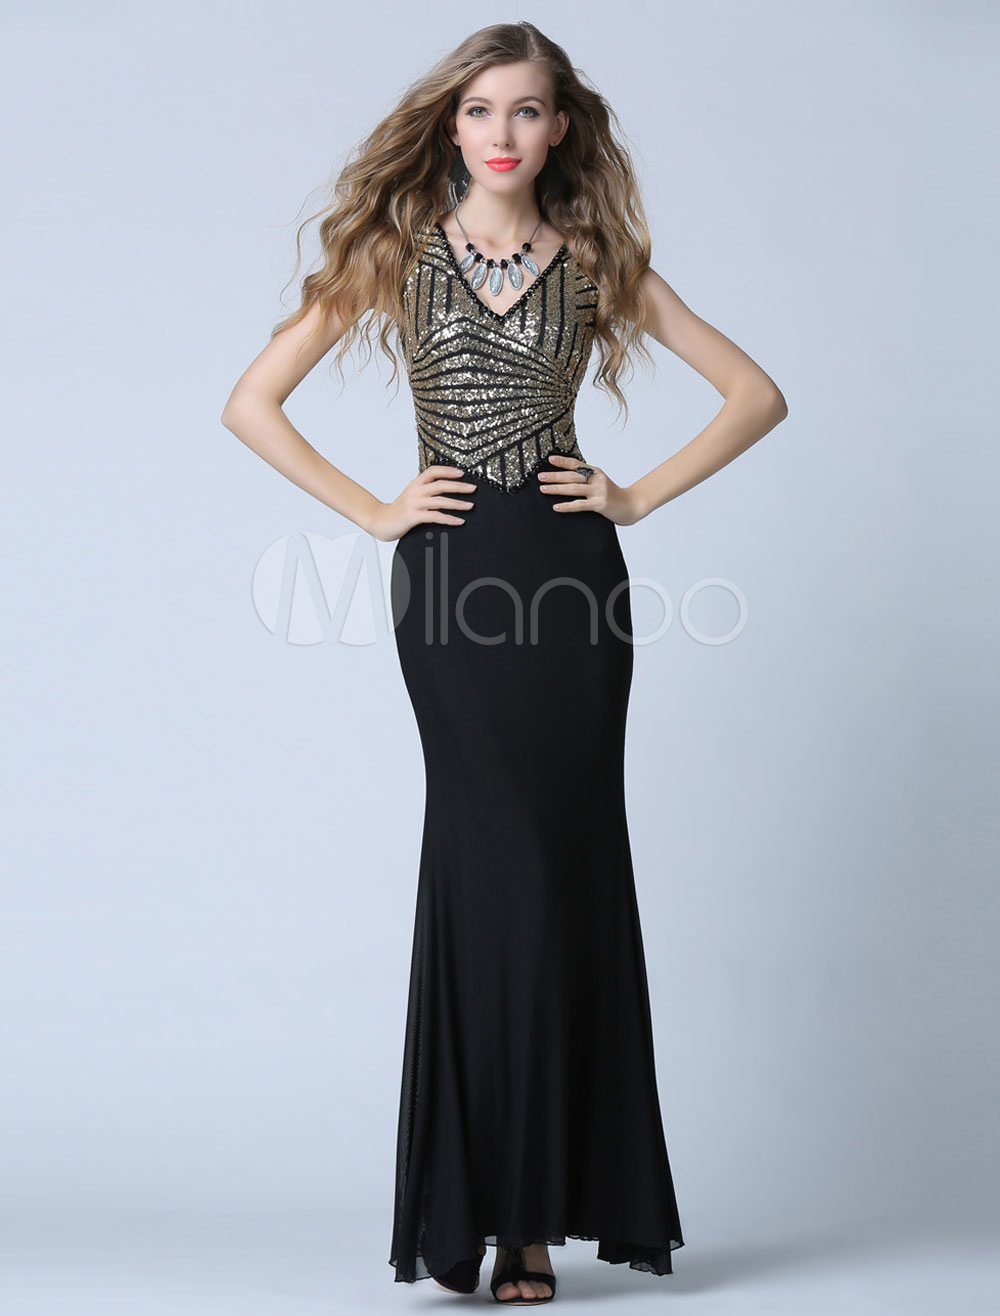 Black Prom Dress Stripes Sheath Tulle Evening Dress (Wedding Cheap Party Dress) photo